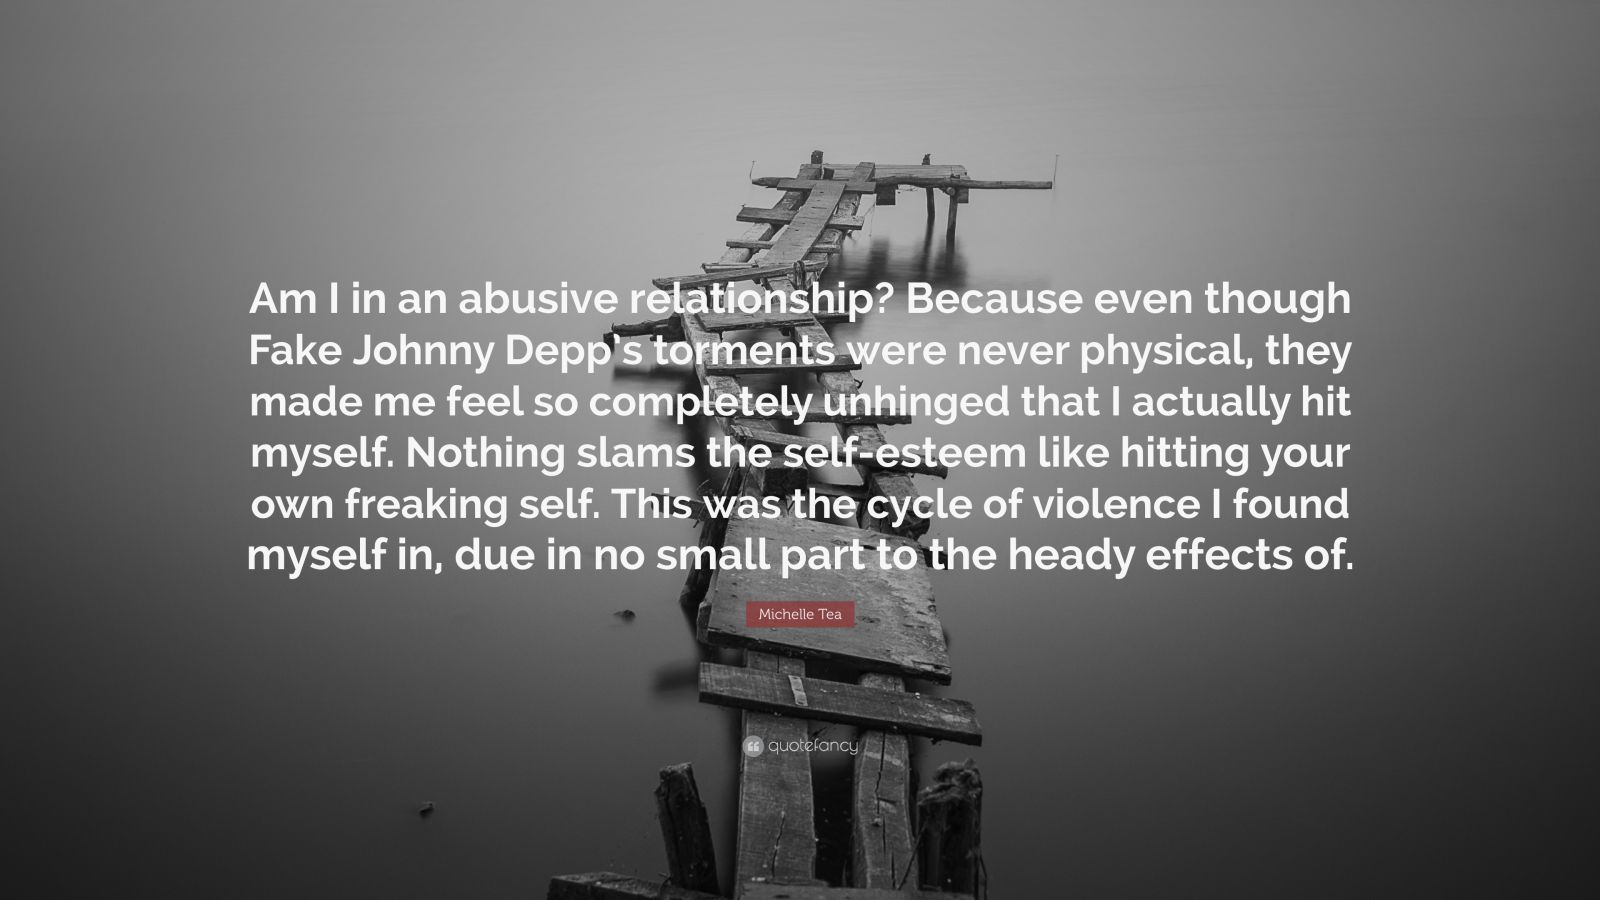 abusive relationship quotes tumblr